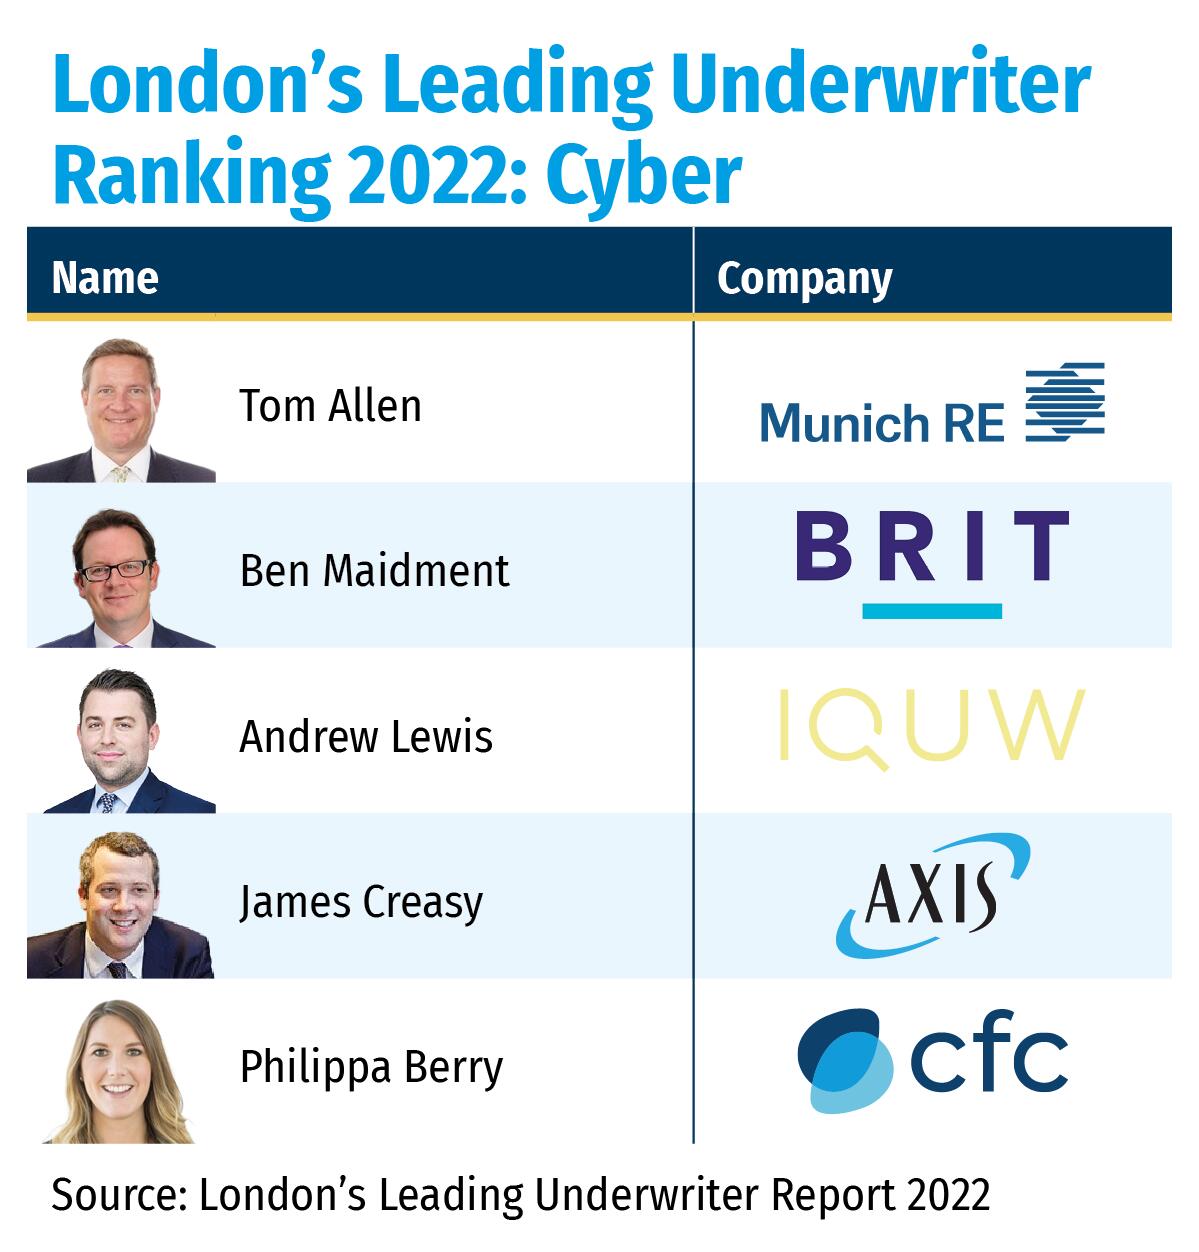 London’s Leading Underwriter Ranking 2022- Cyber